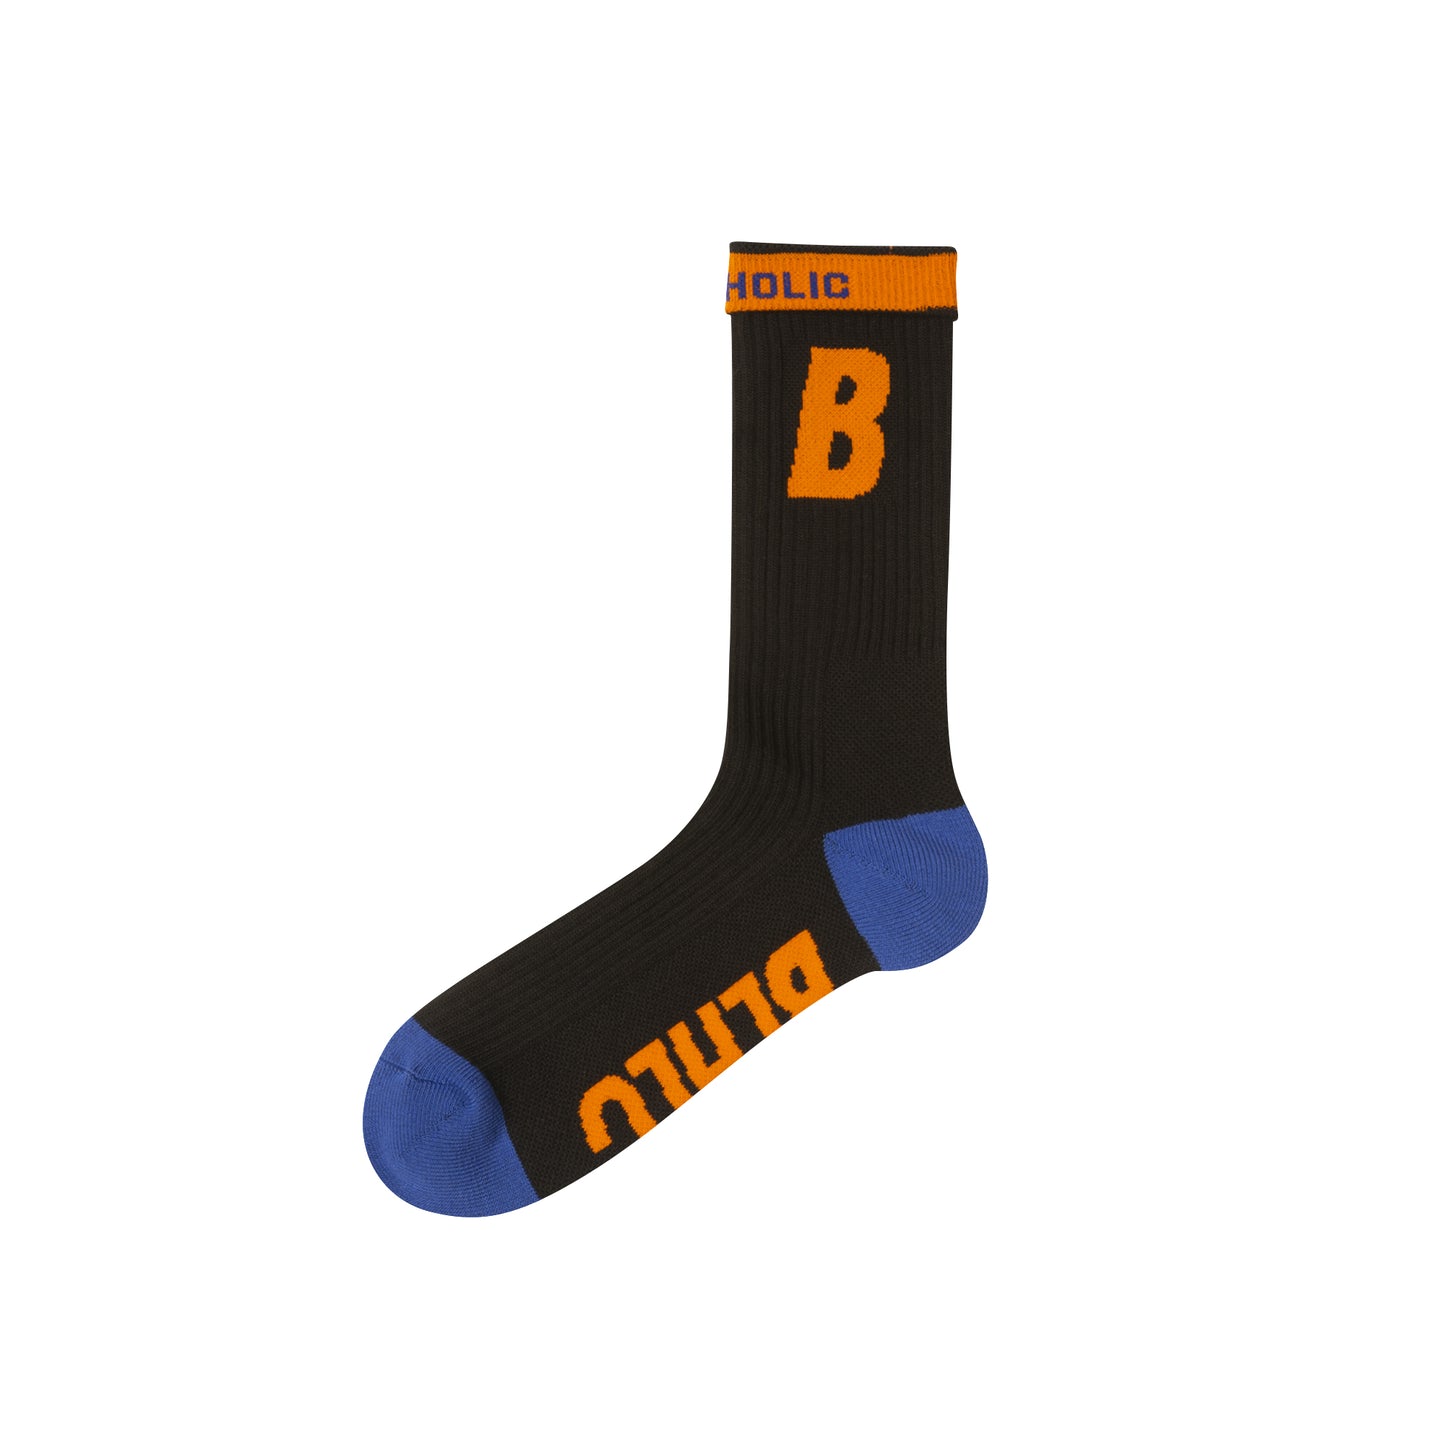 B Socks (black/orange/blue)